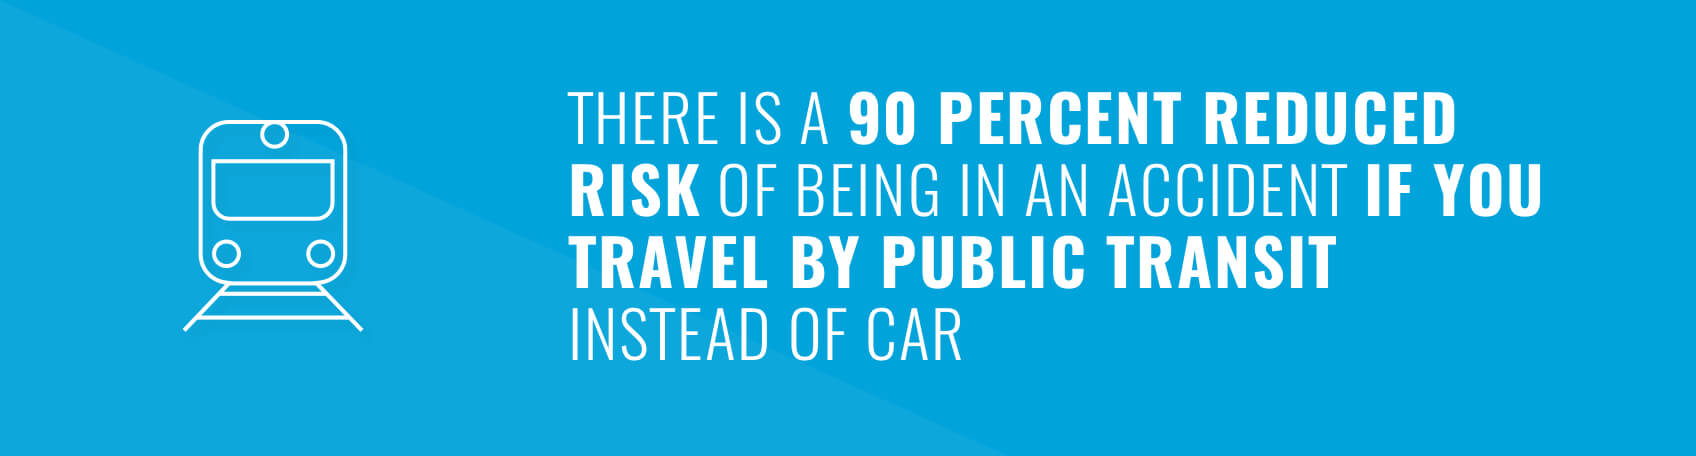 90 percent reduced risk of taking public transportation than car